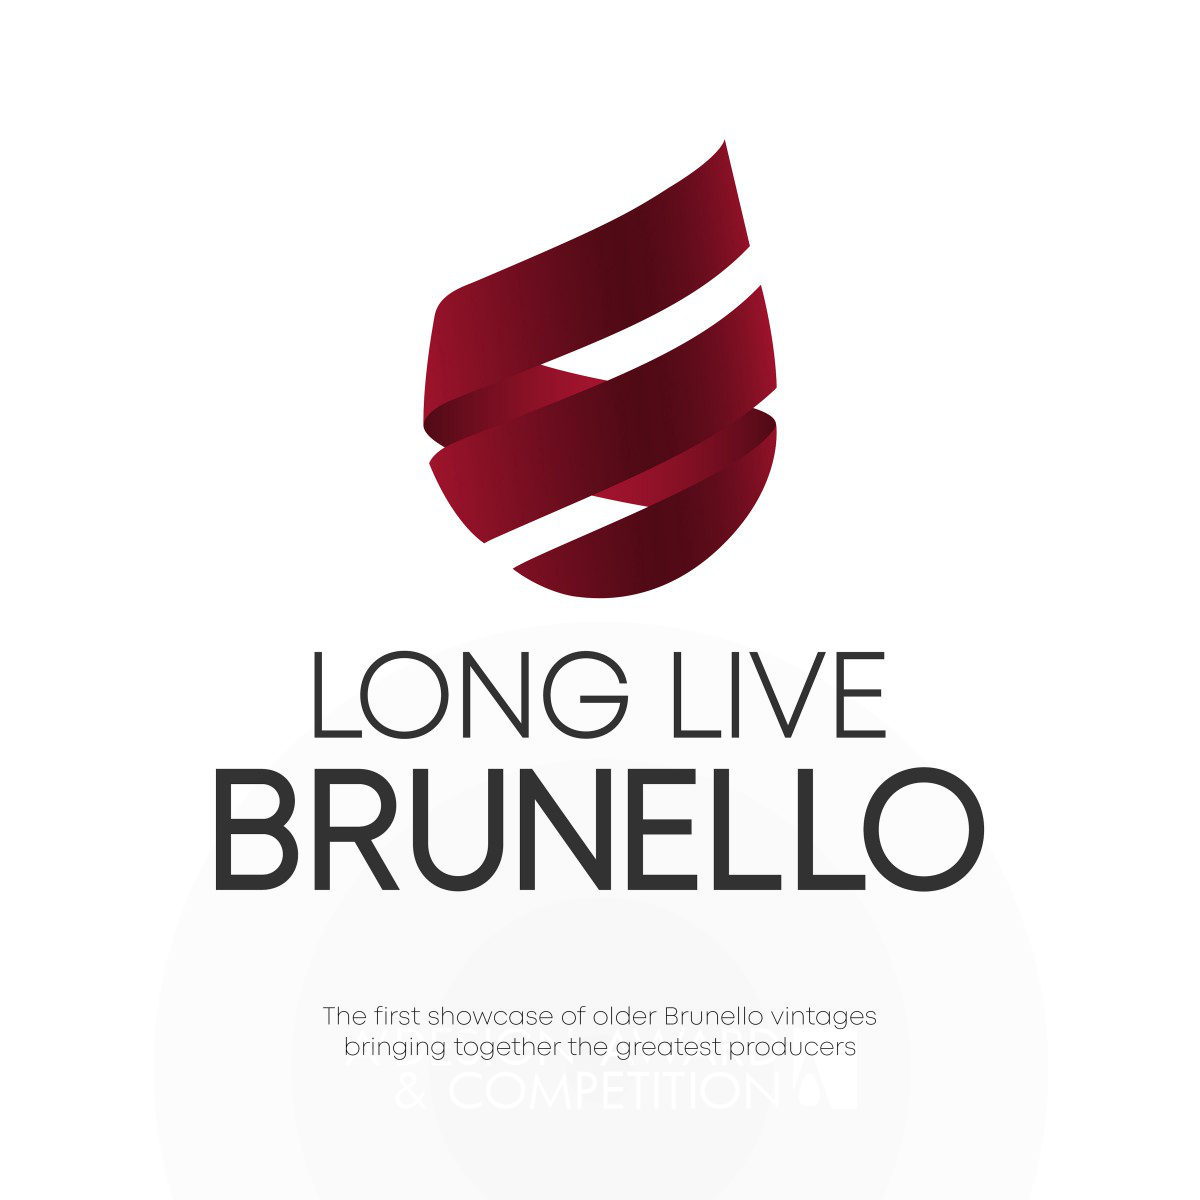 Long Live Brunello Corporate Identity by Cristian Carrara